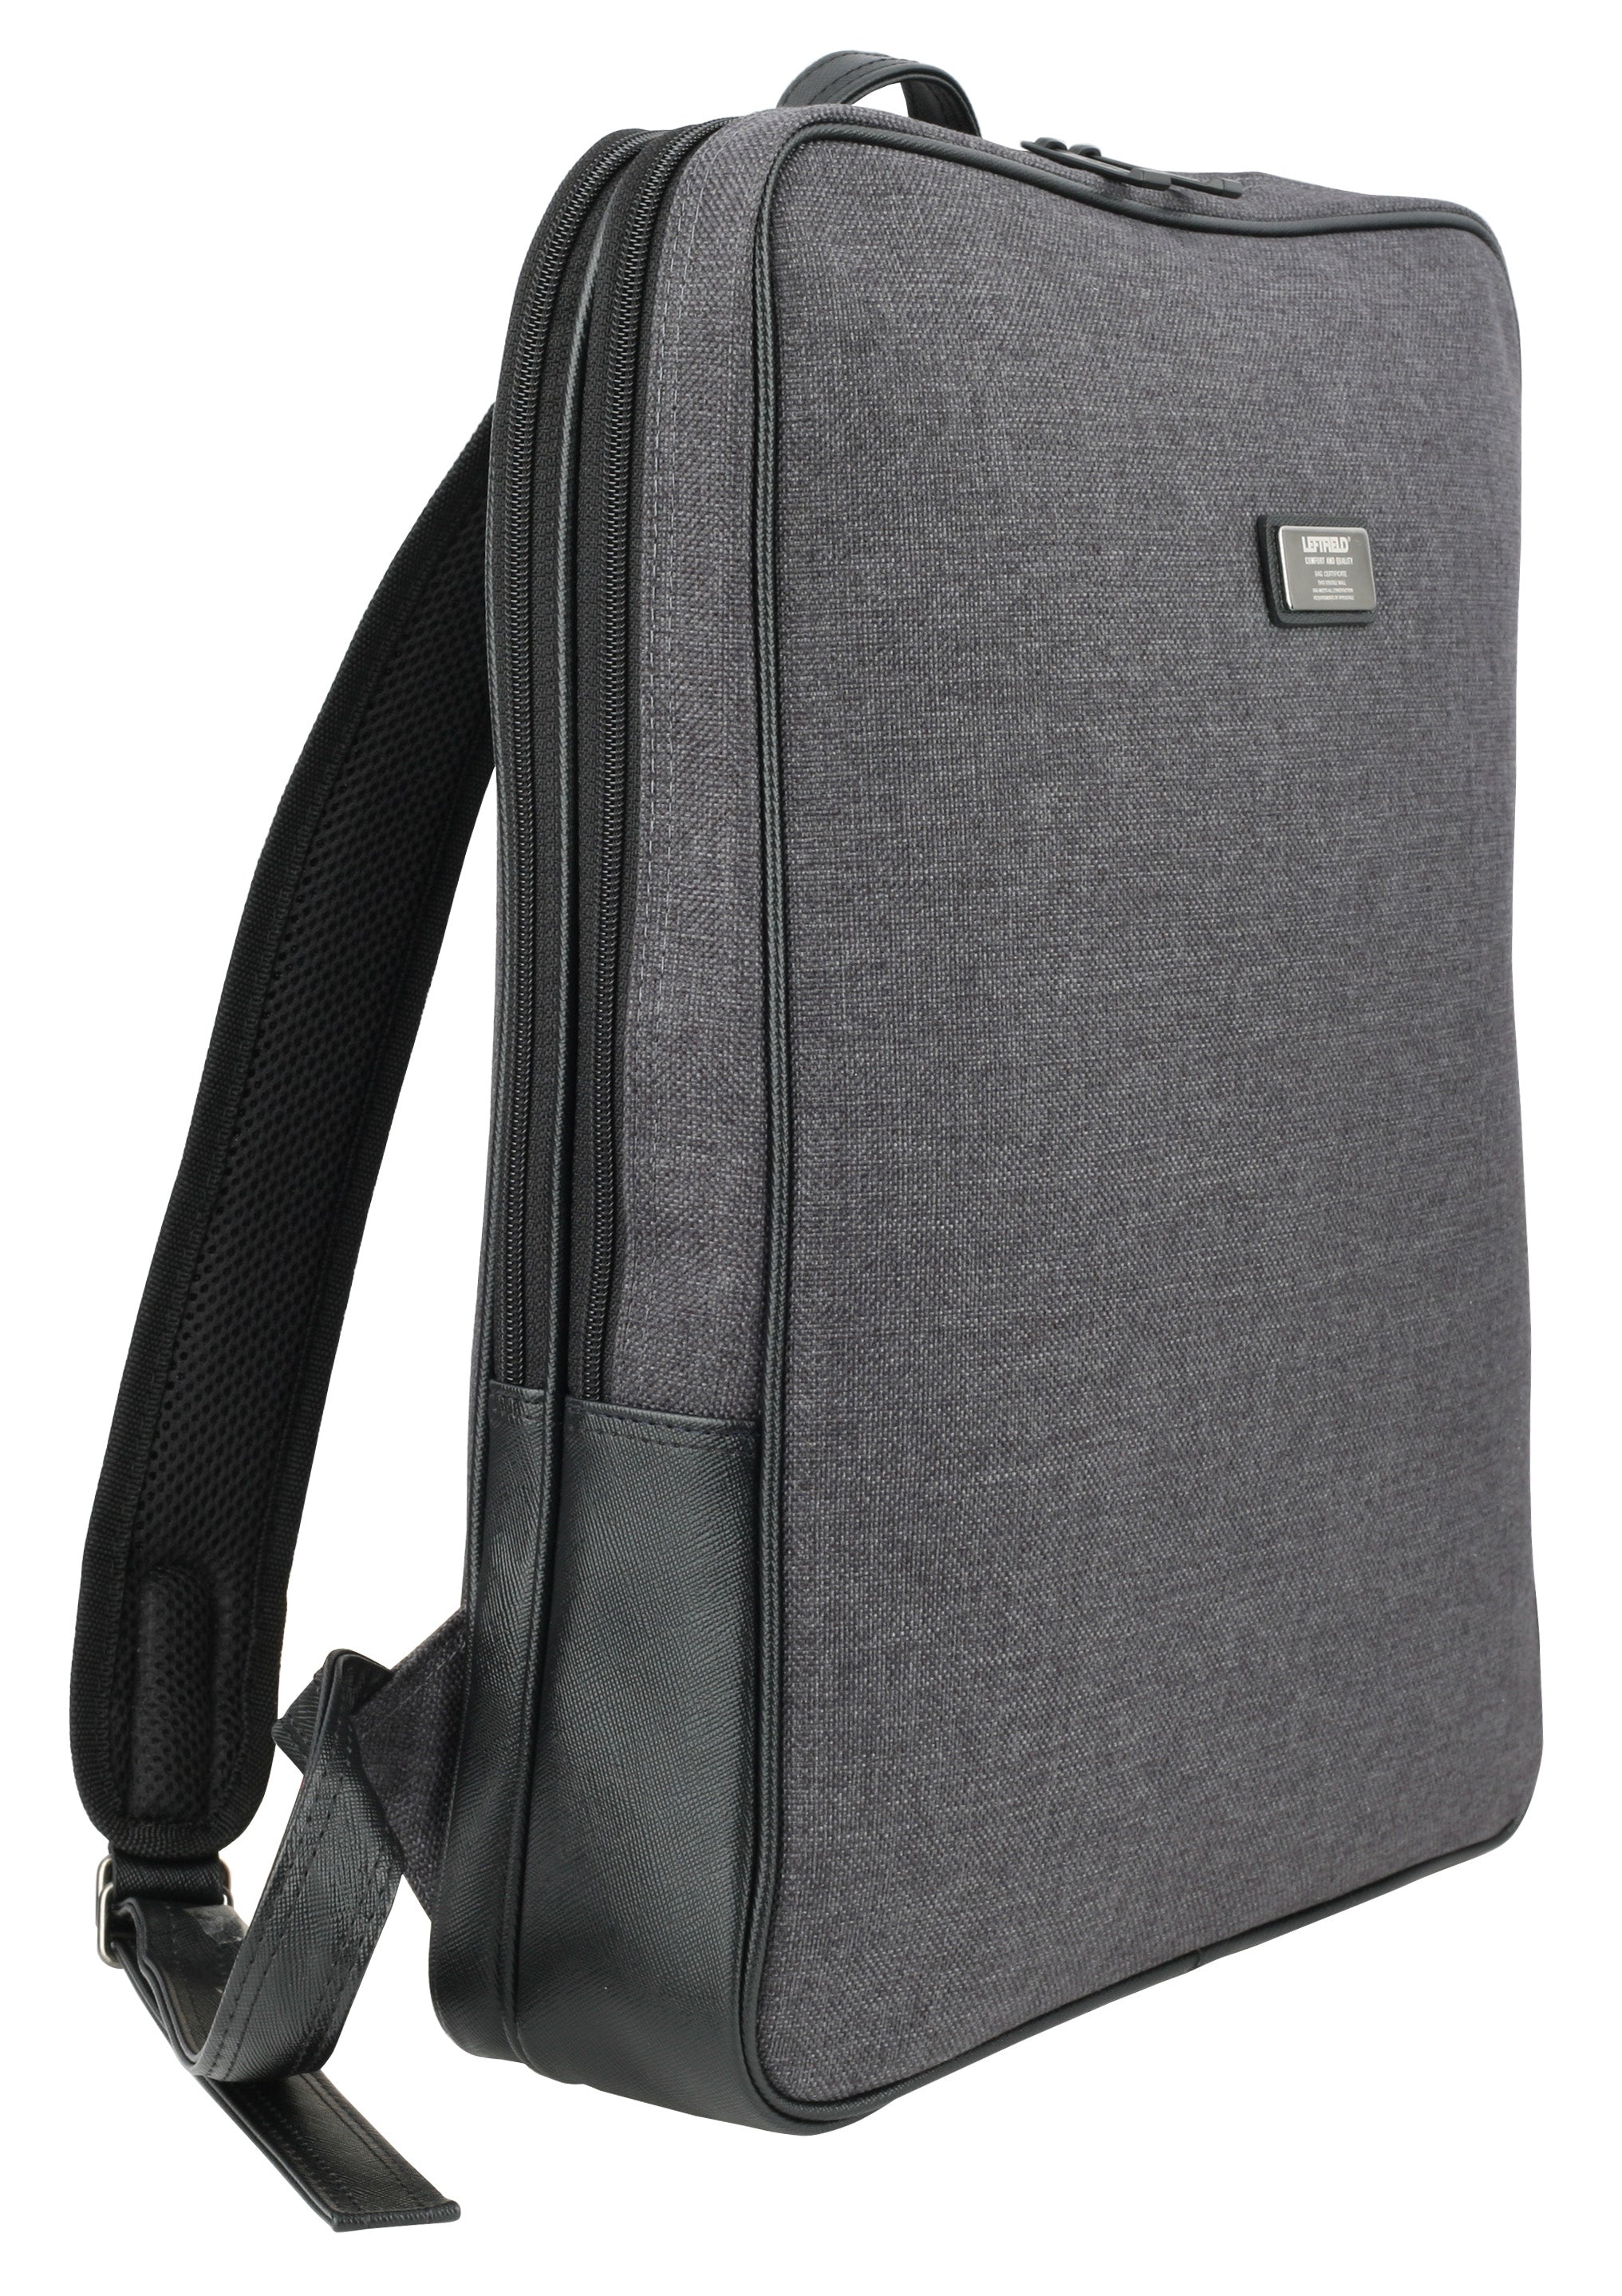 Black Square Canvas Laptop School Book Business Backpacks